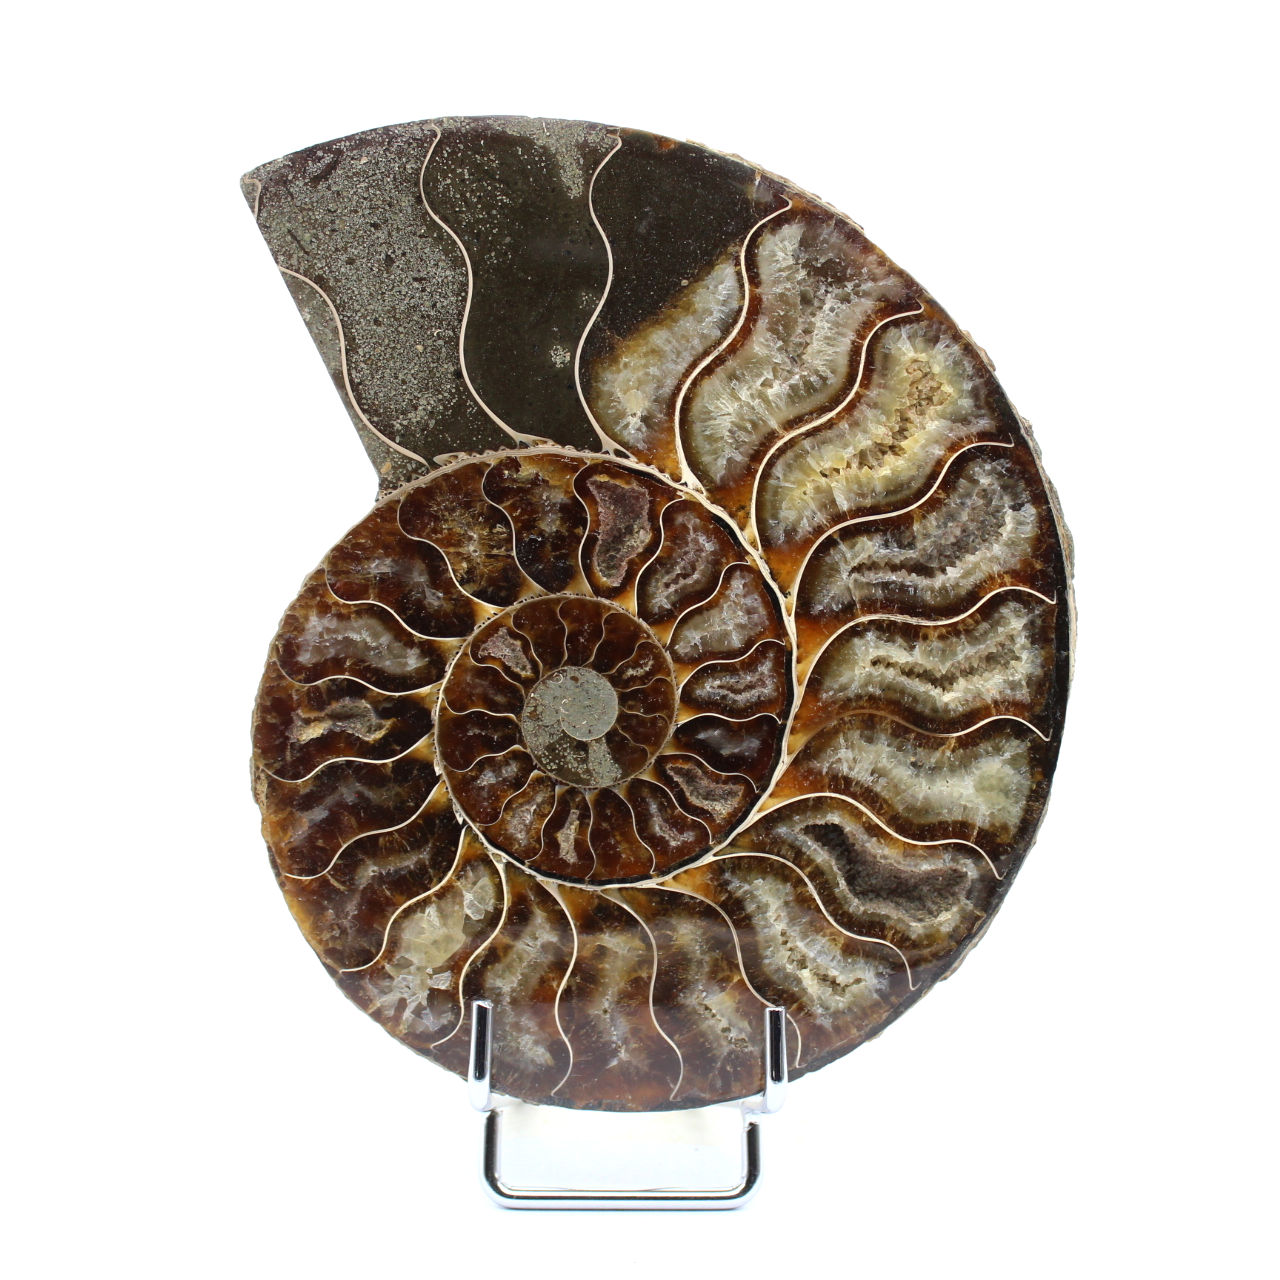 Ammonite sciée polie